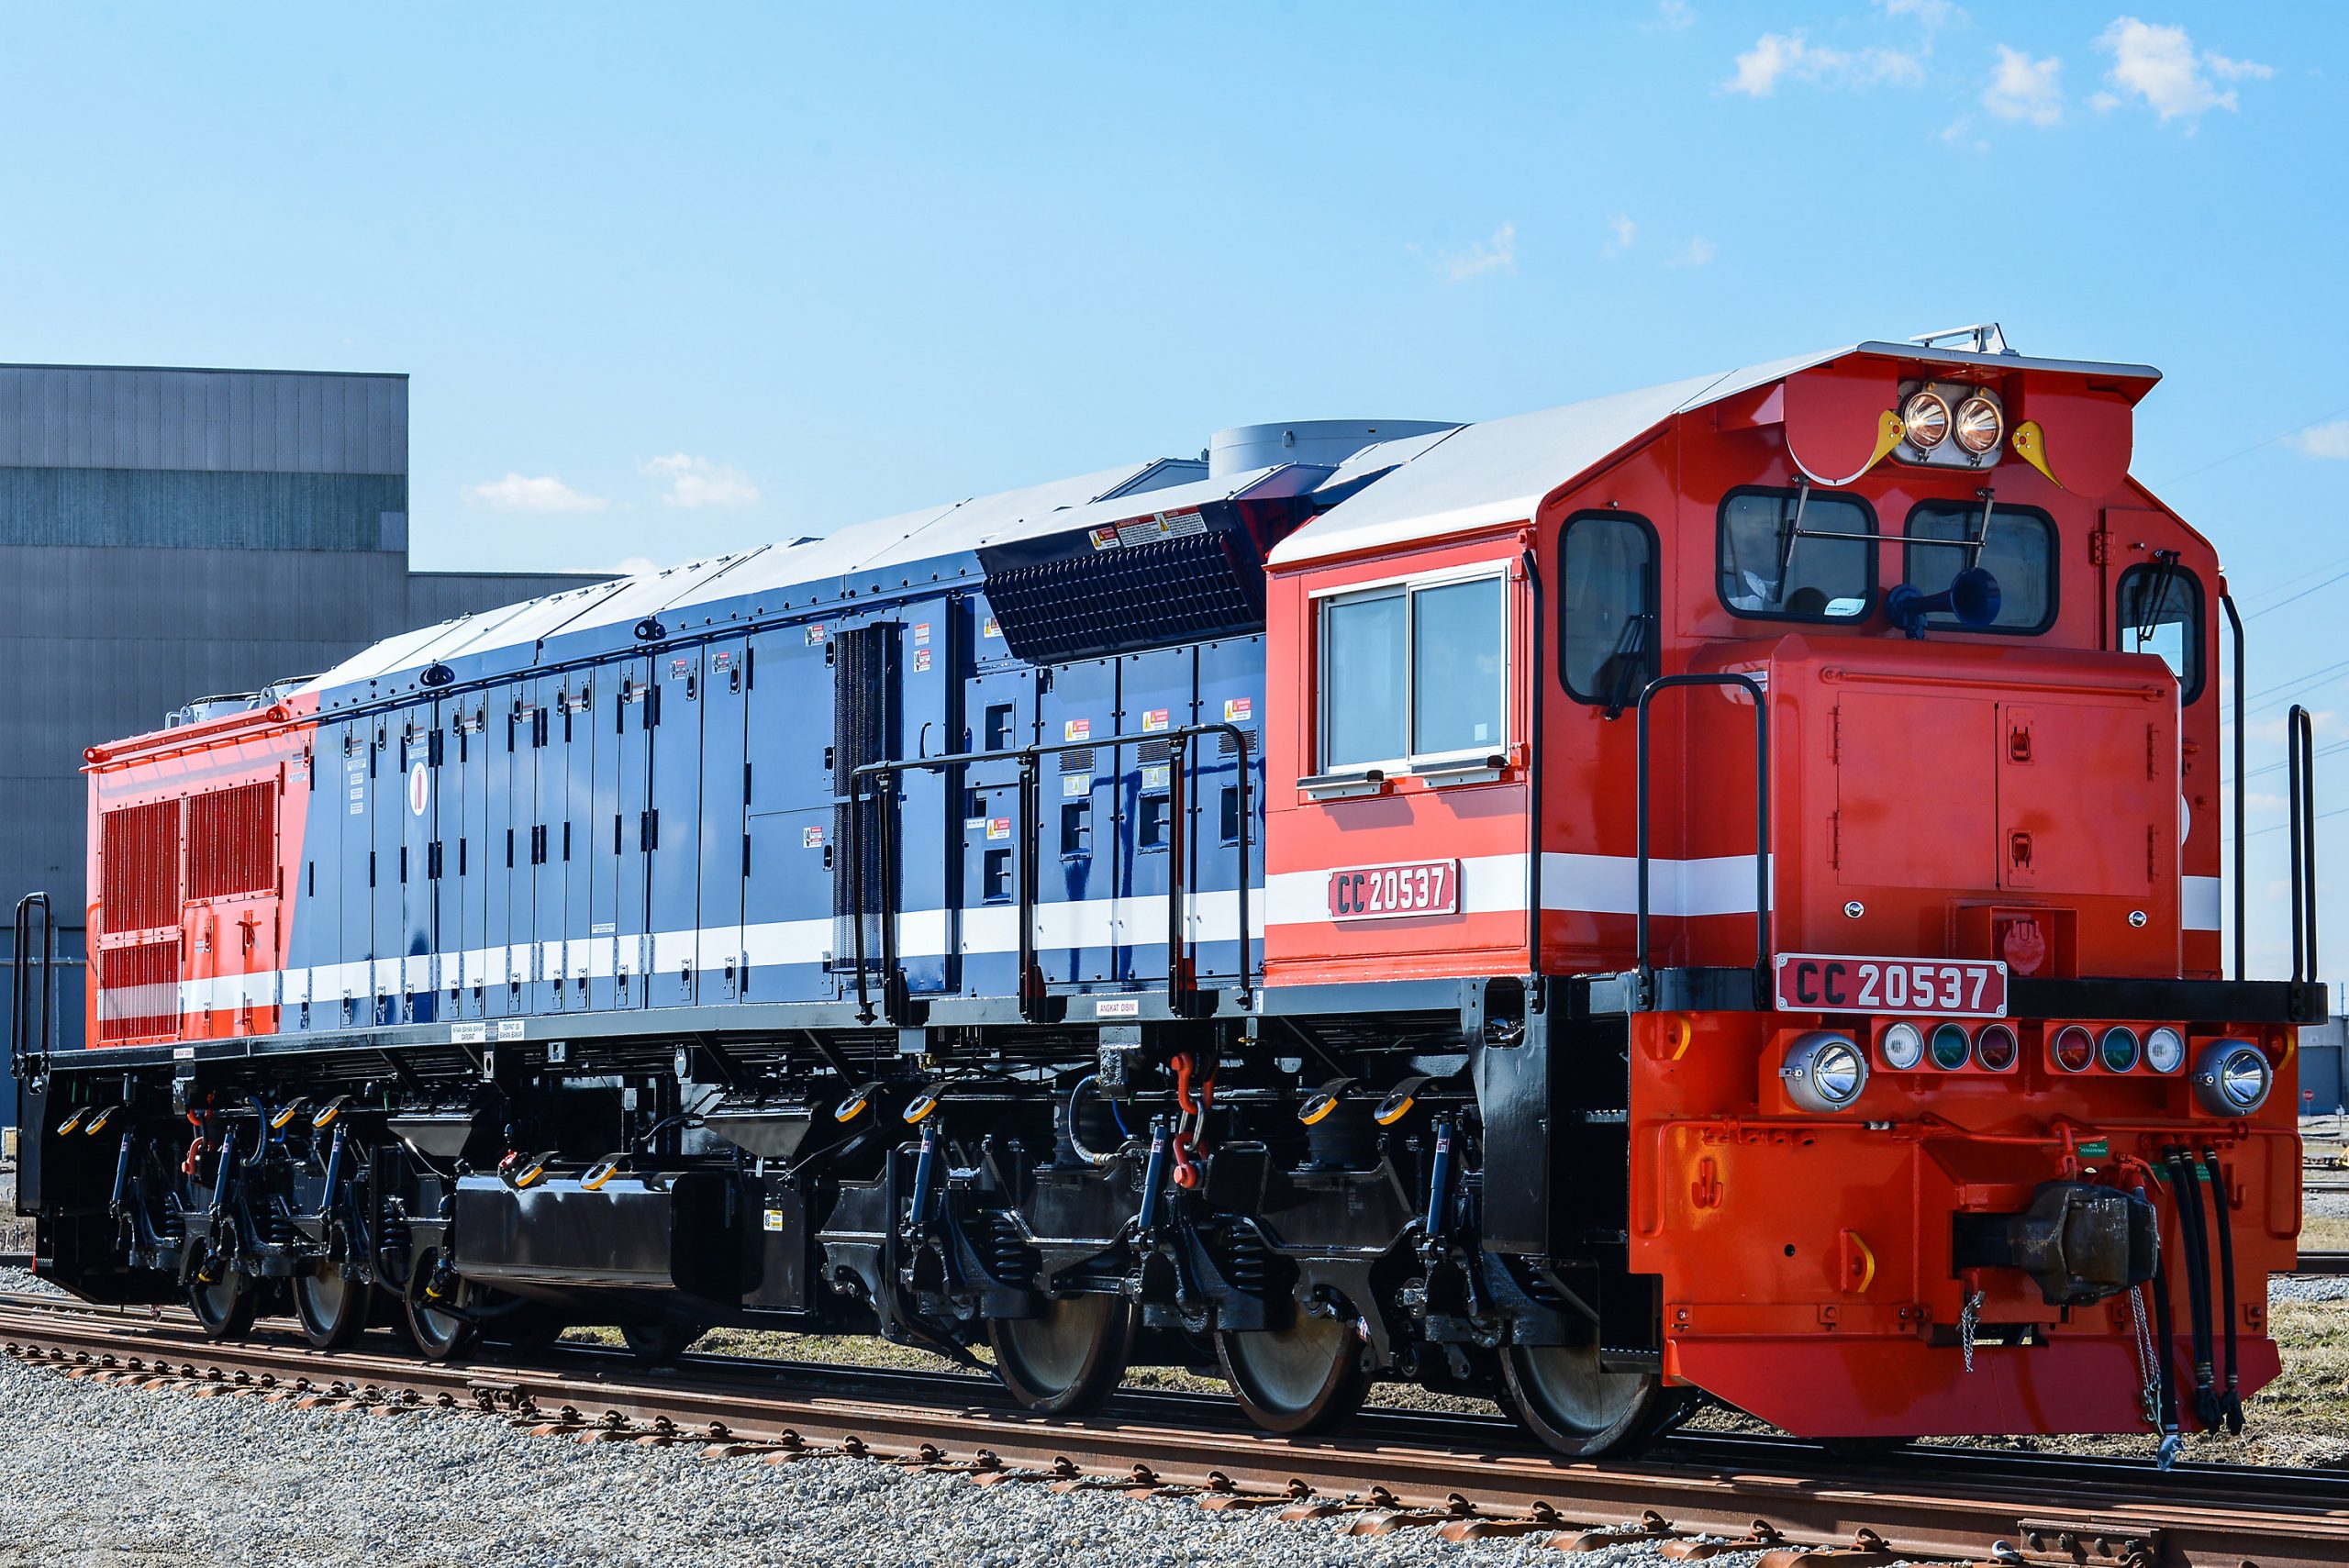 EMD freight locomotives